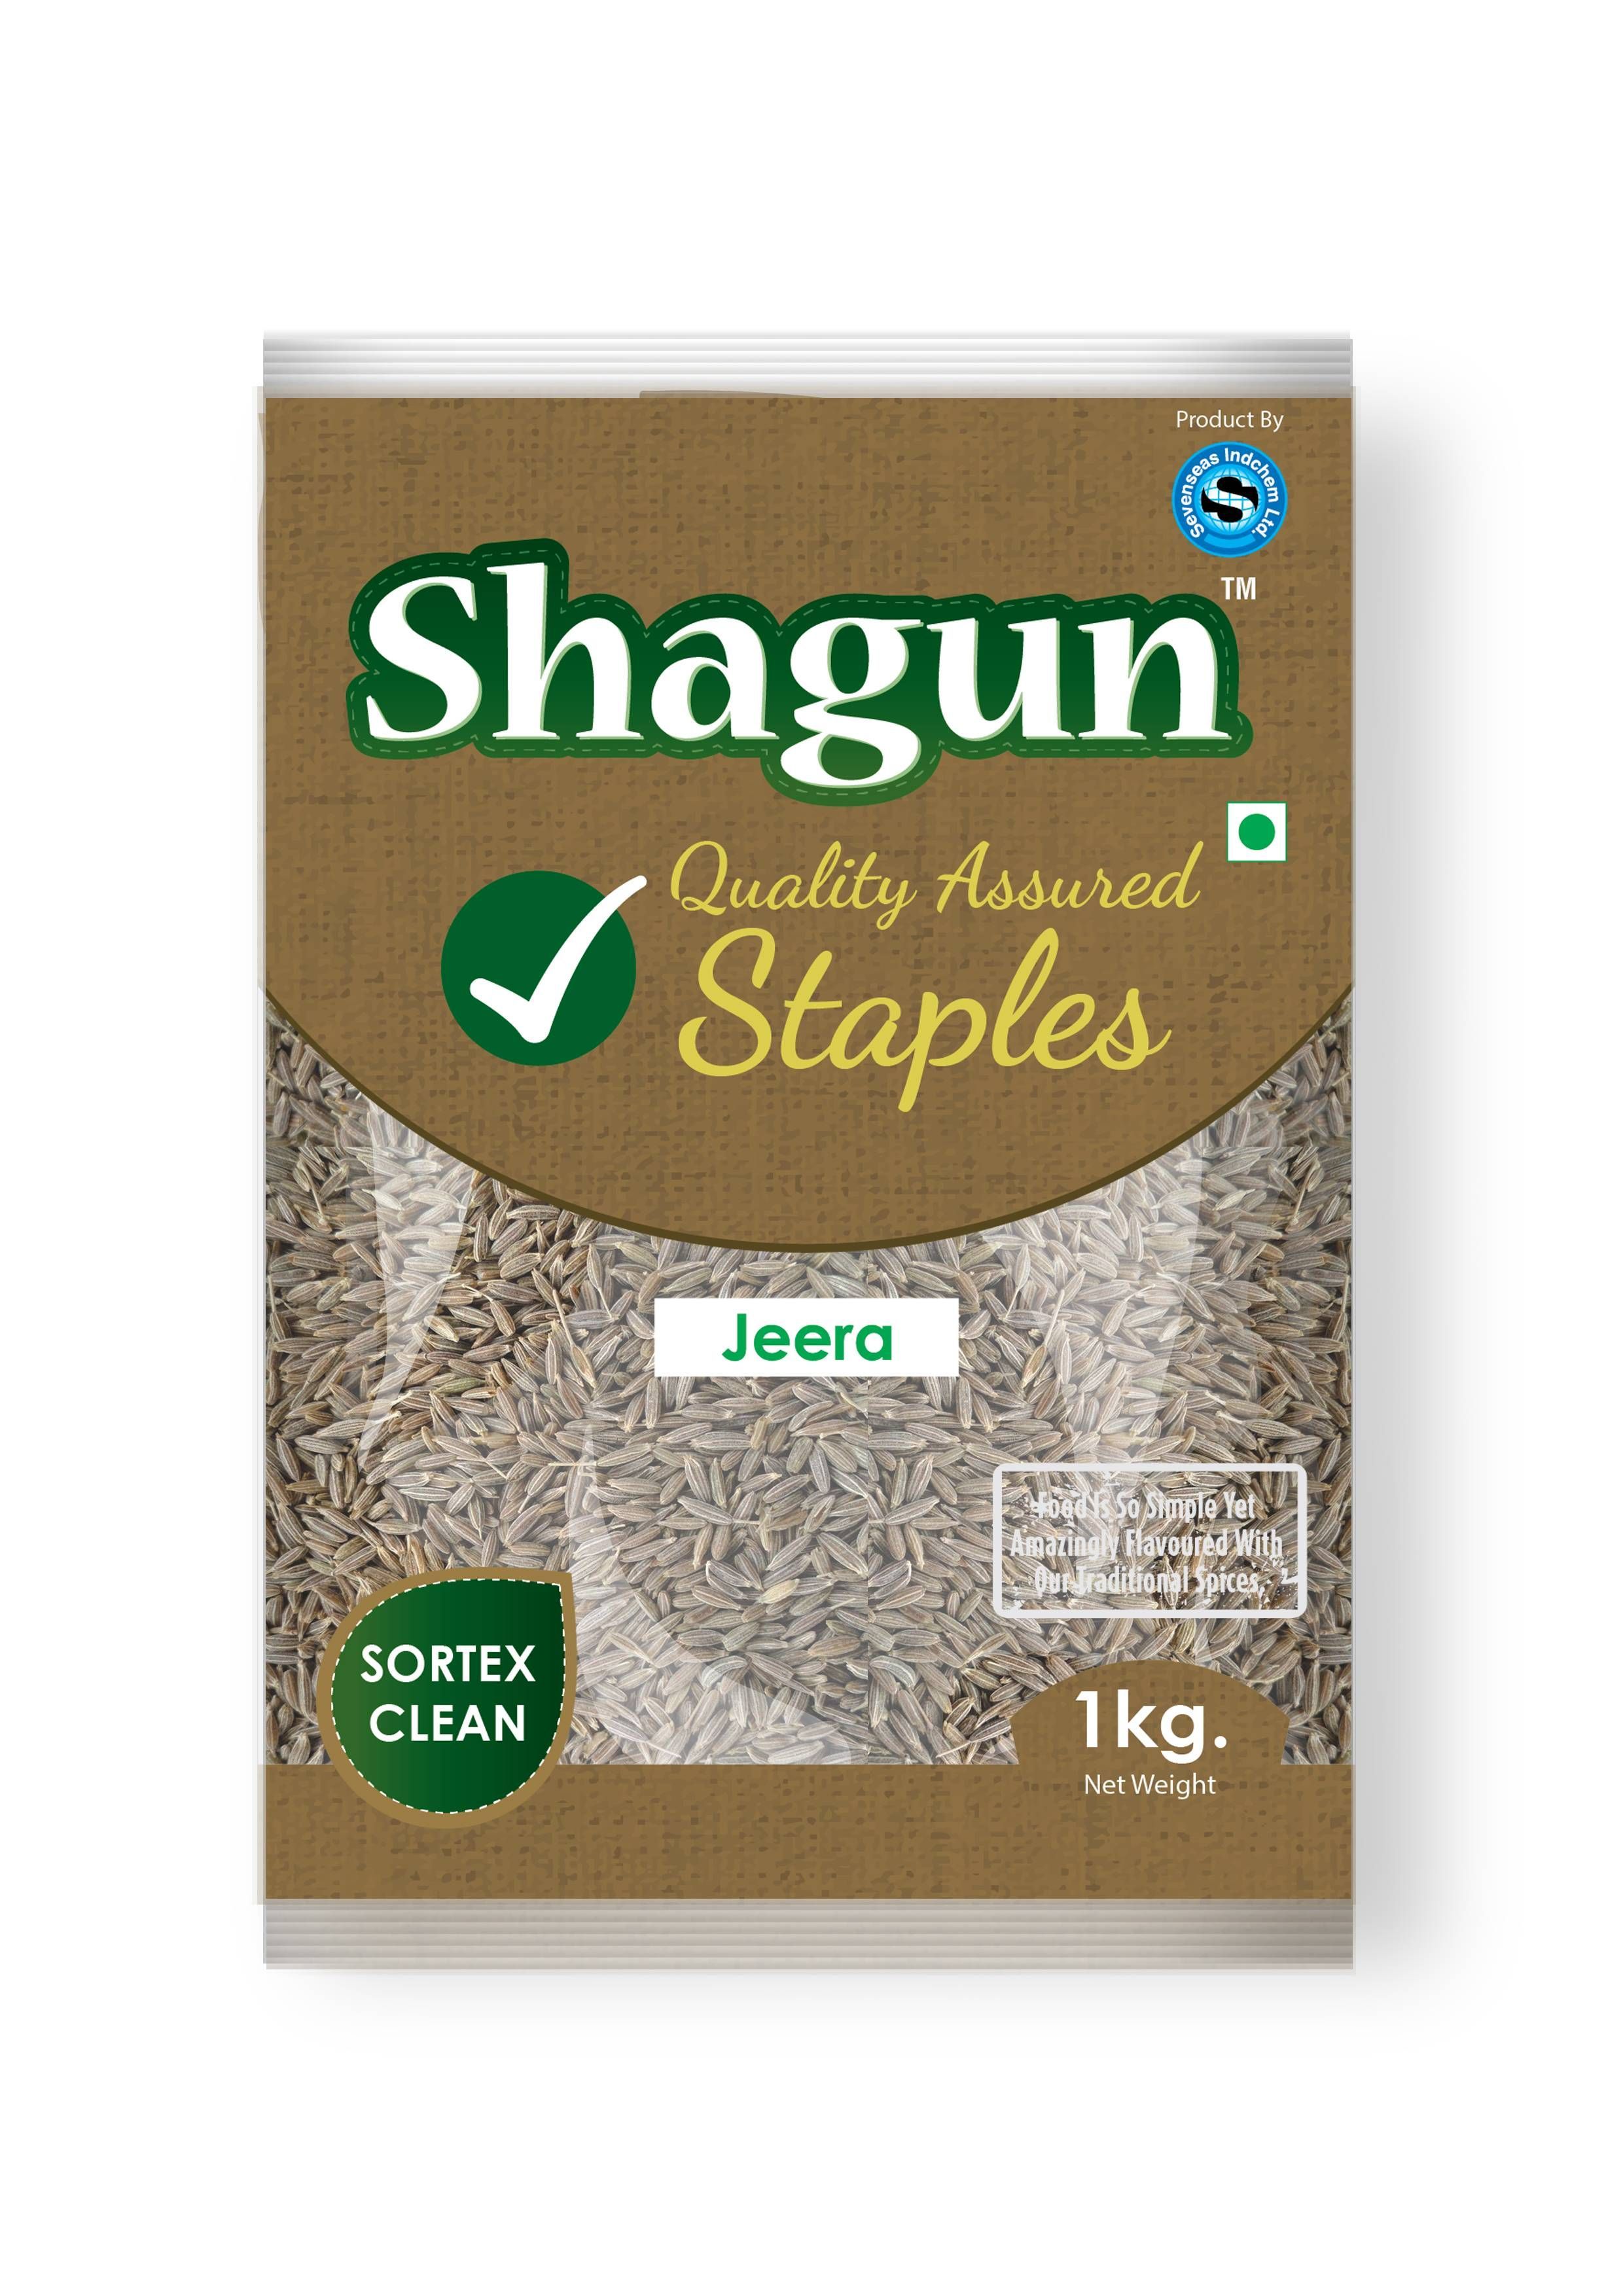 Shagun Staples